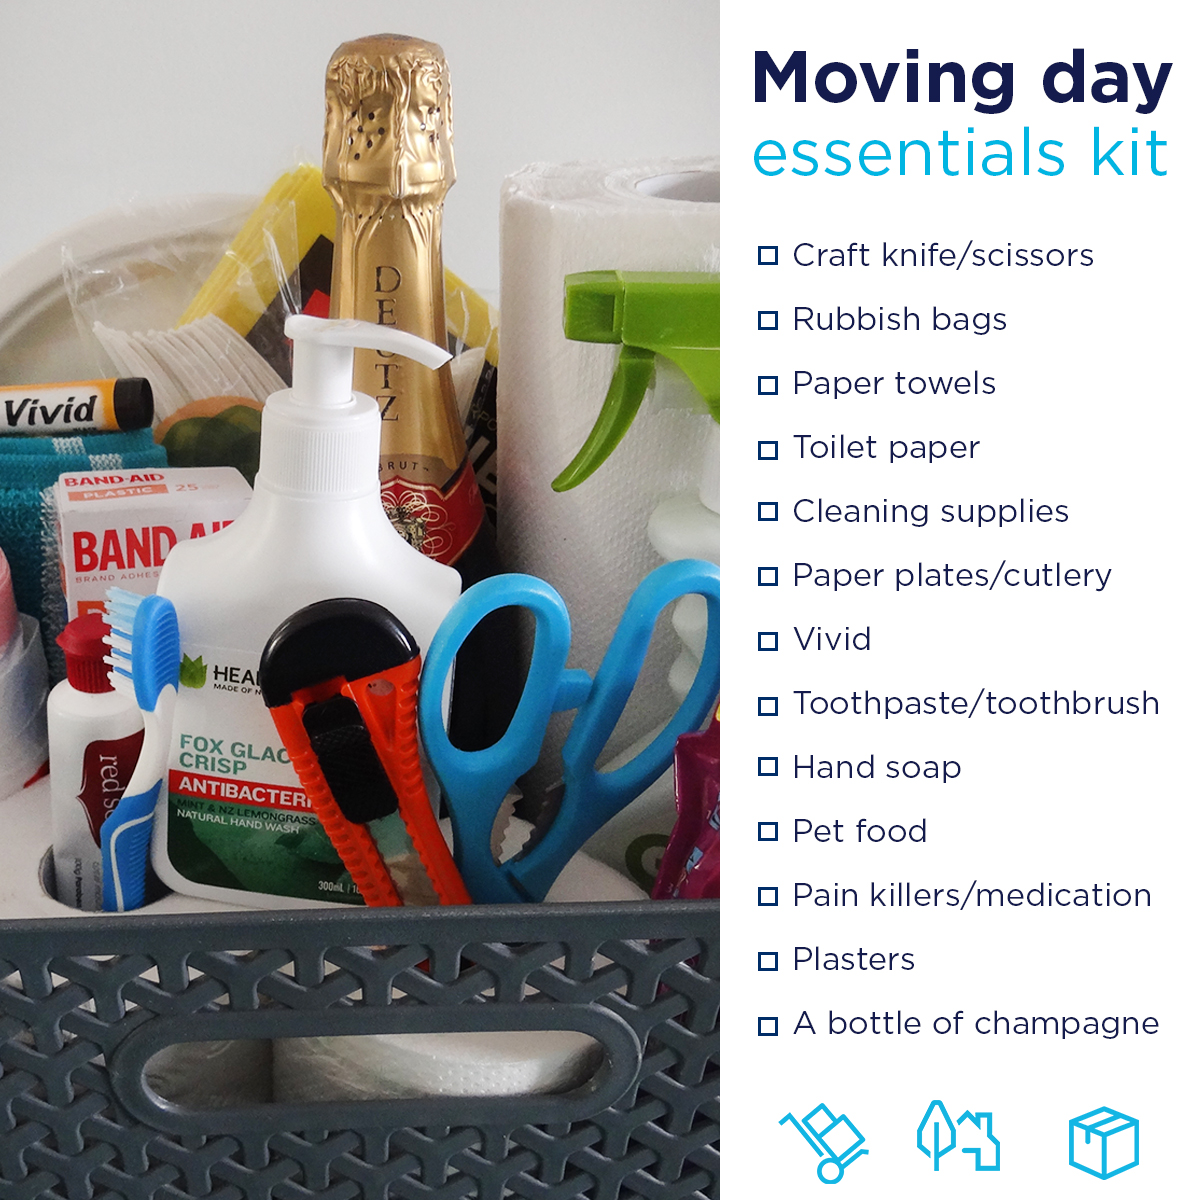 Moving day essentials kit checklist